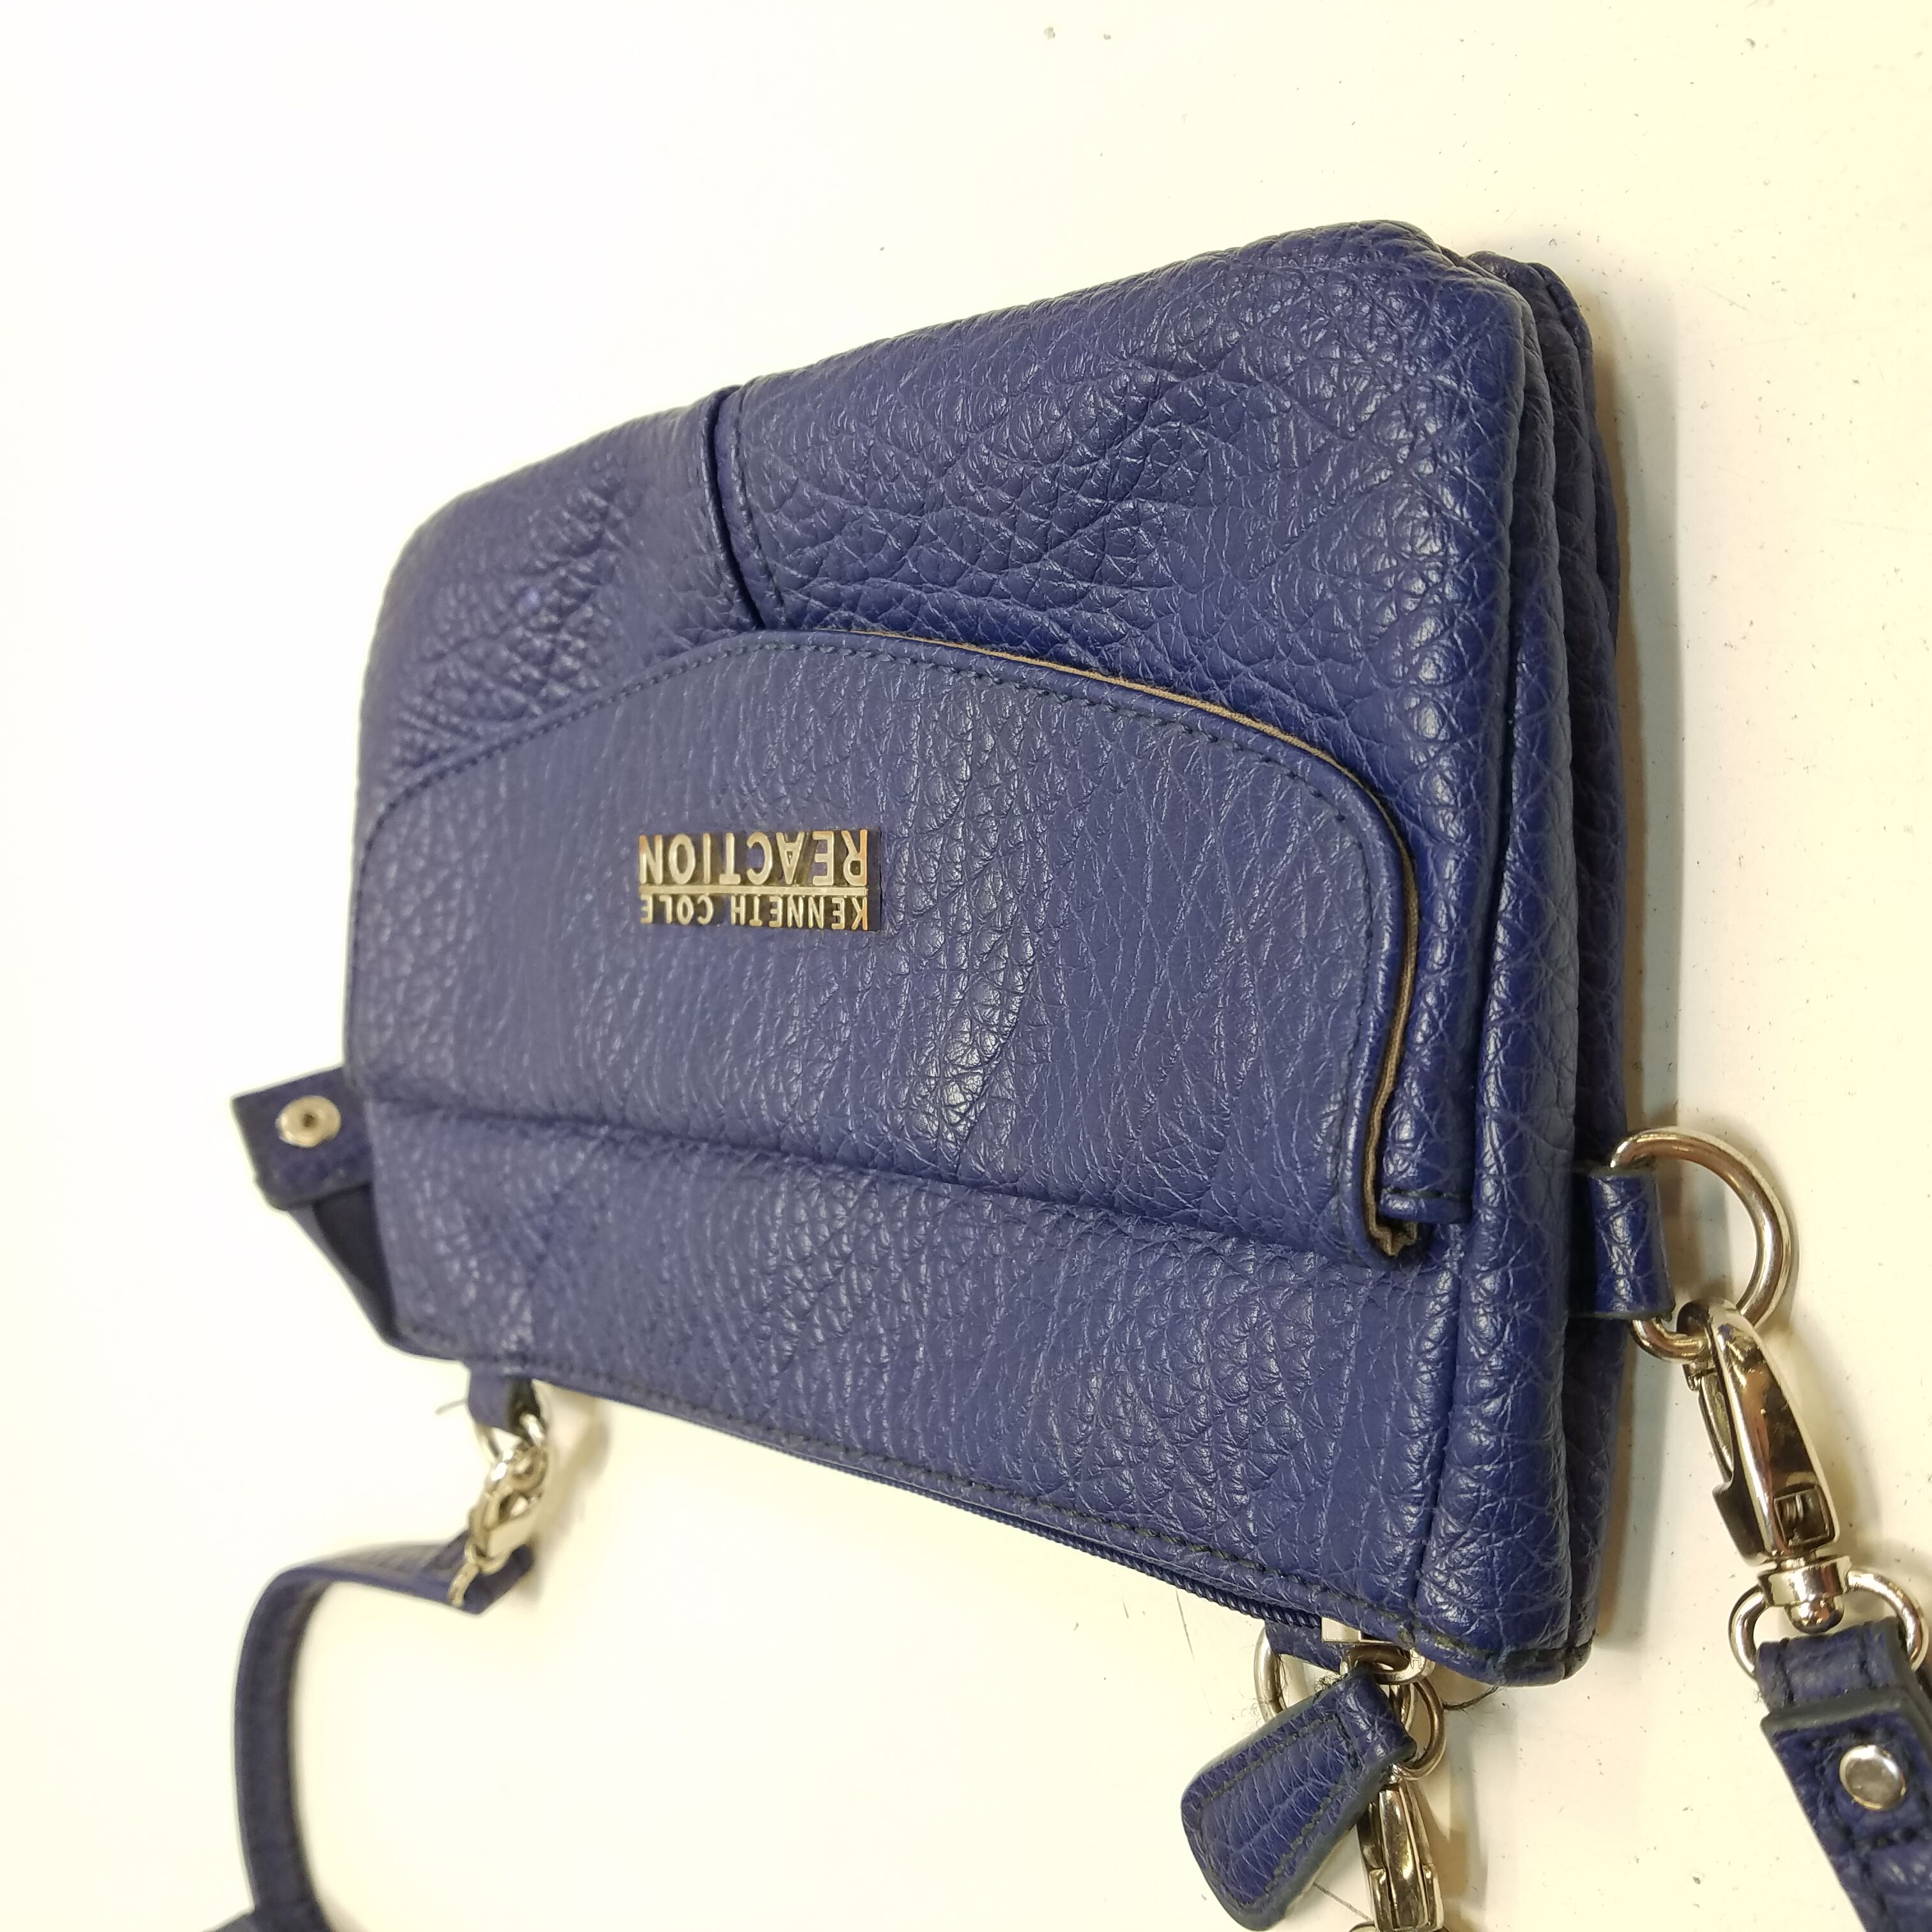 Buy Blue Handbags for Women by BAGSY MALONE Online | Ajio.com